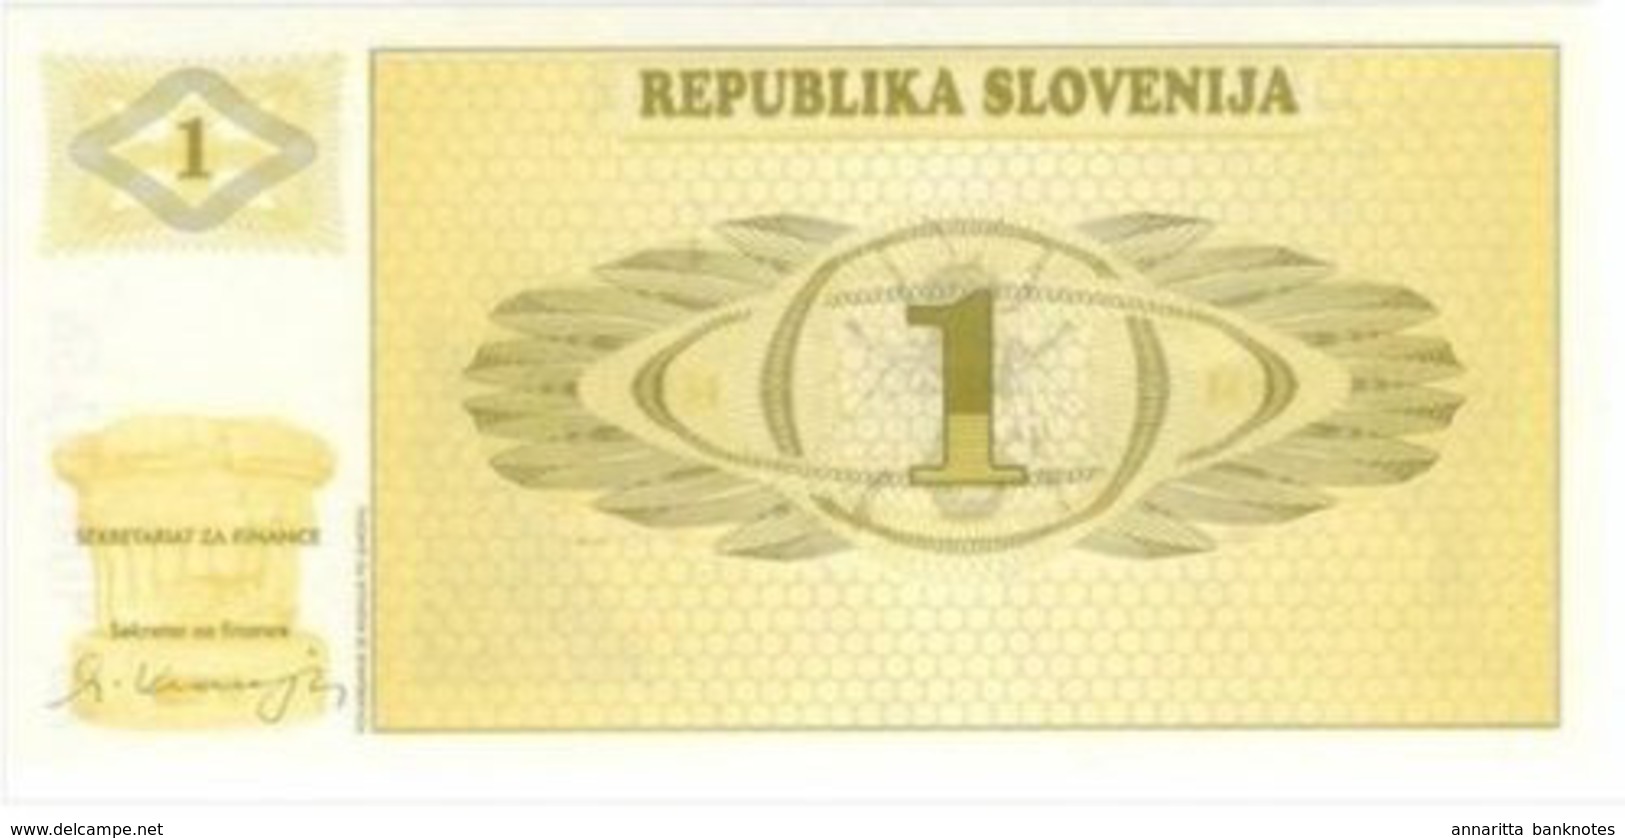 Slovenia 1 Tolar ND (1990), UNC (P-1s, B-201as1) - Slovénie